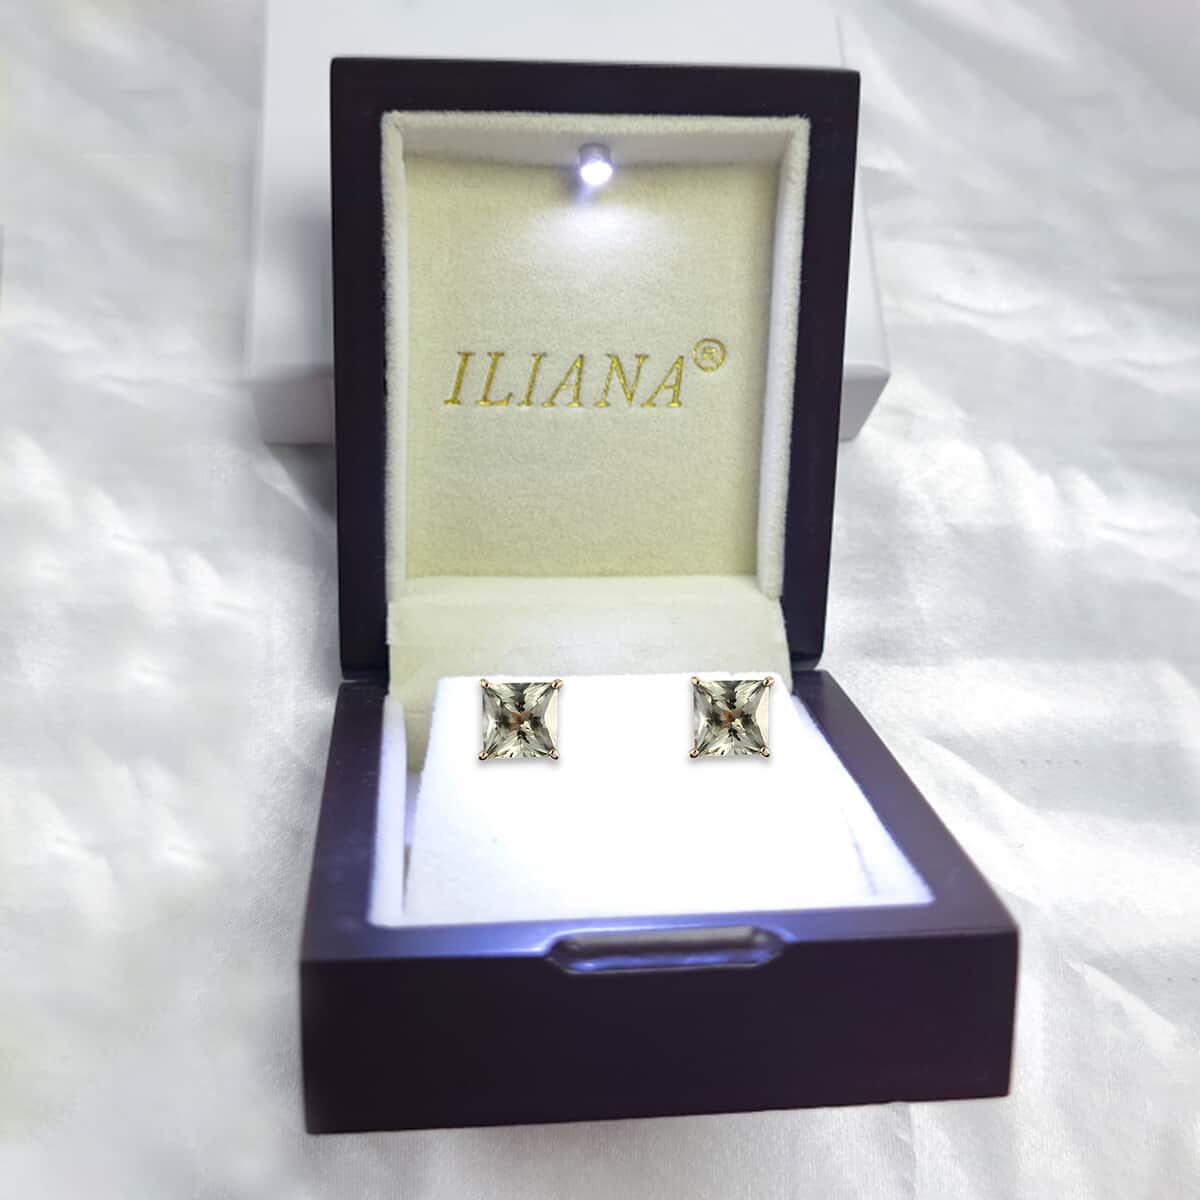 Iliana 18K Yellow Gold AAA Princess Cut Turkizite Solitaire Stud Earrings, Solitaire Earrings, Turkizite Earrings, Princess Cut Diaspore, 18K Yellow Gold Earrings 2.50 ctw image number 6